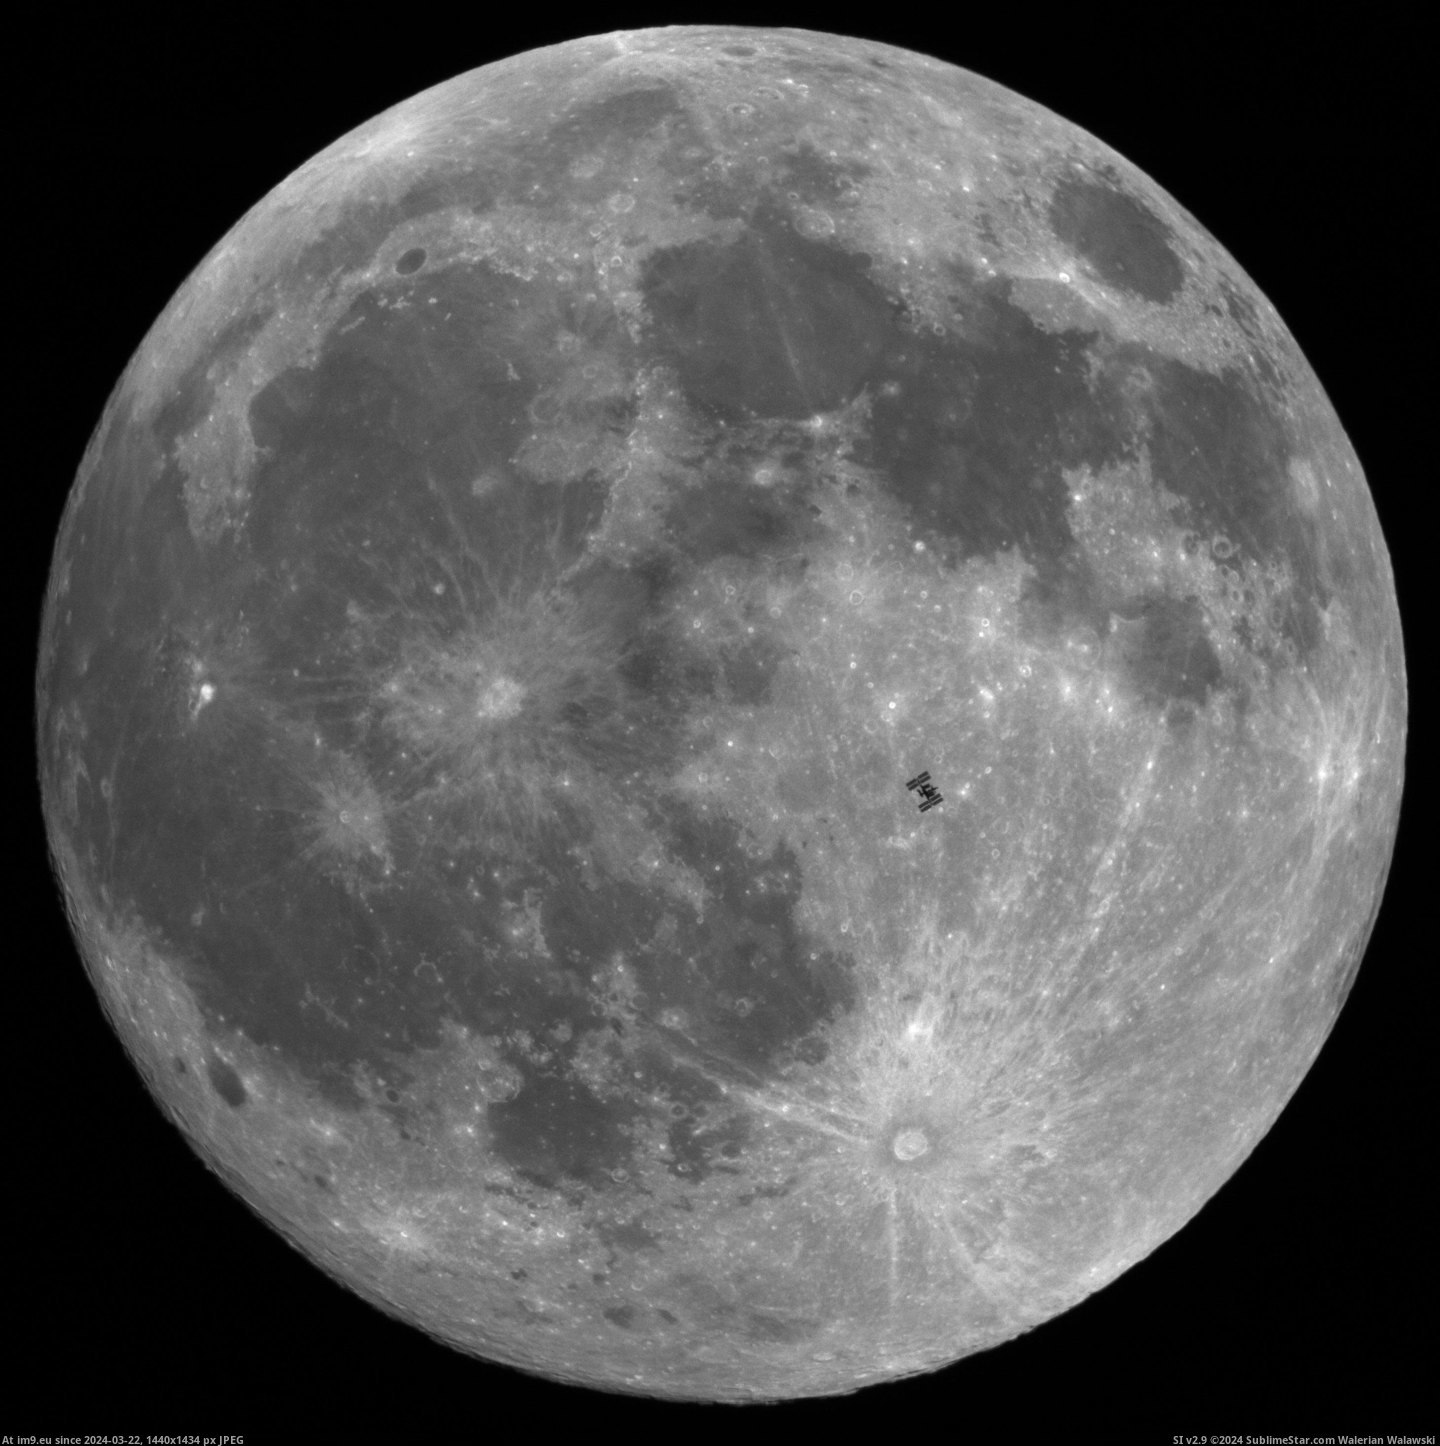 #Full #Front #International #Station #Space #Moon [Pics] The International Space Station in front of the full moon. Pic. (Изображение из альбом My r/PICS favs))